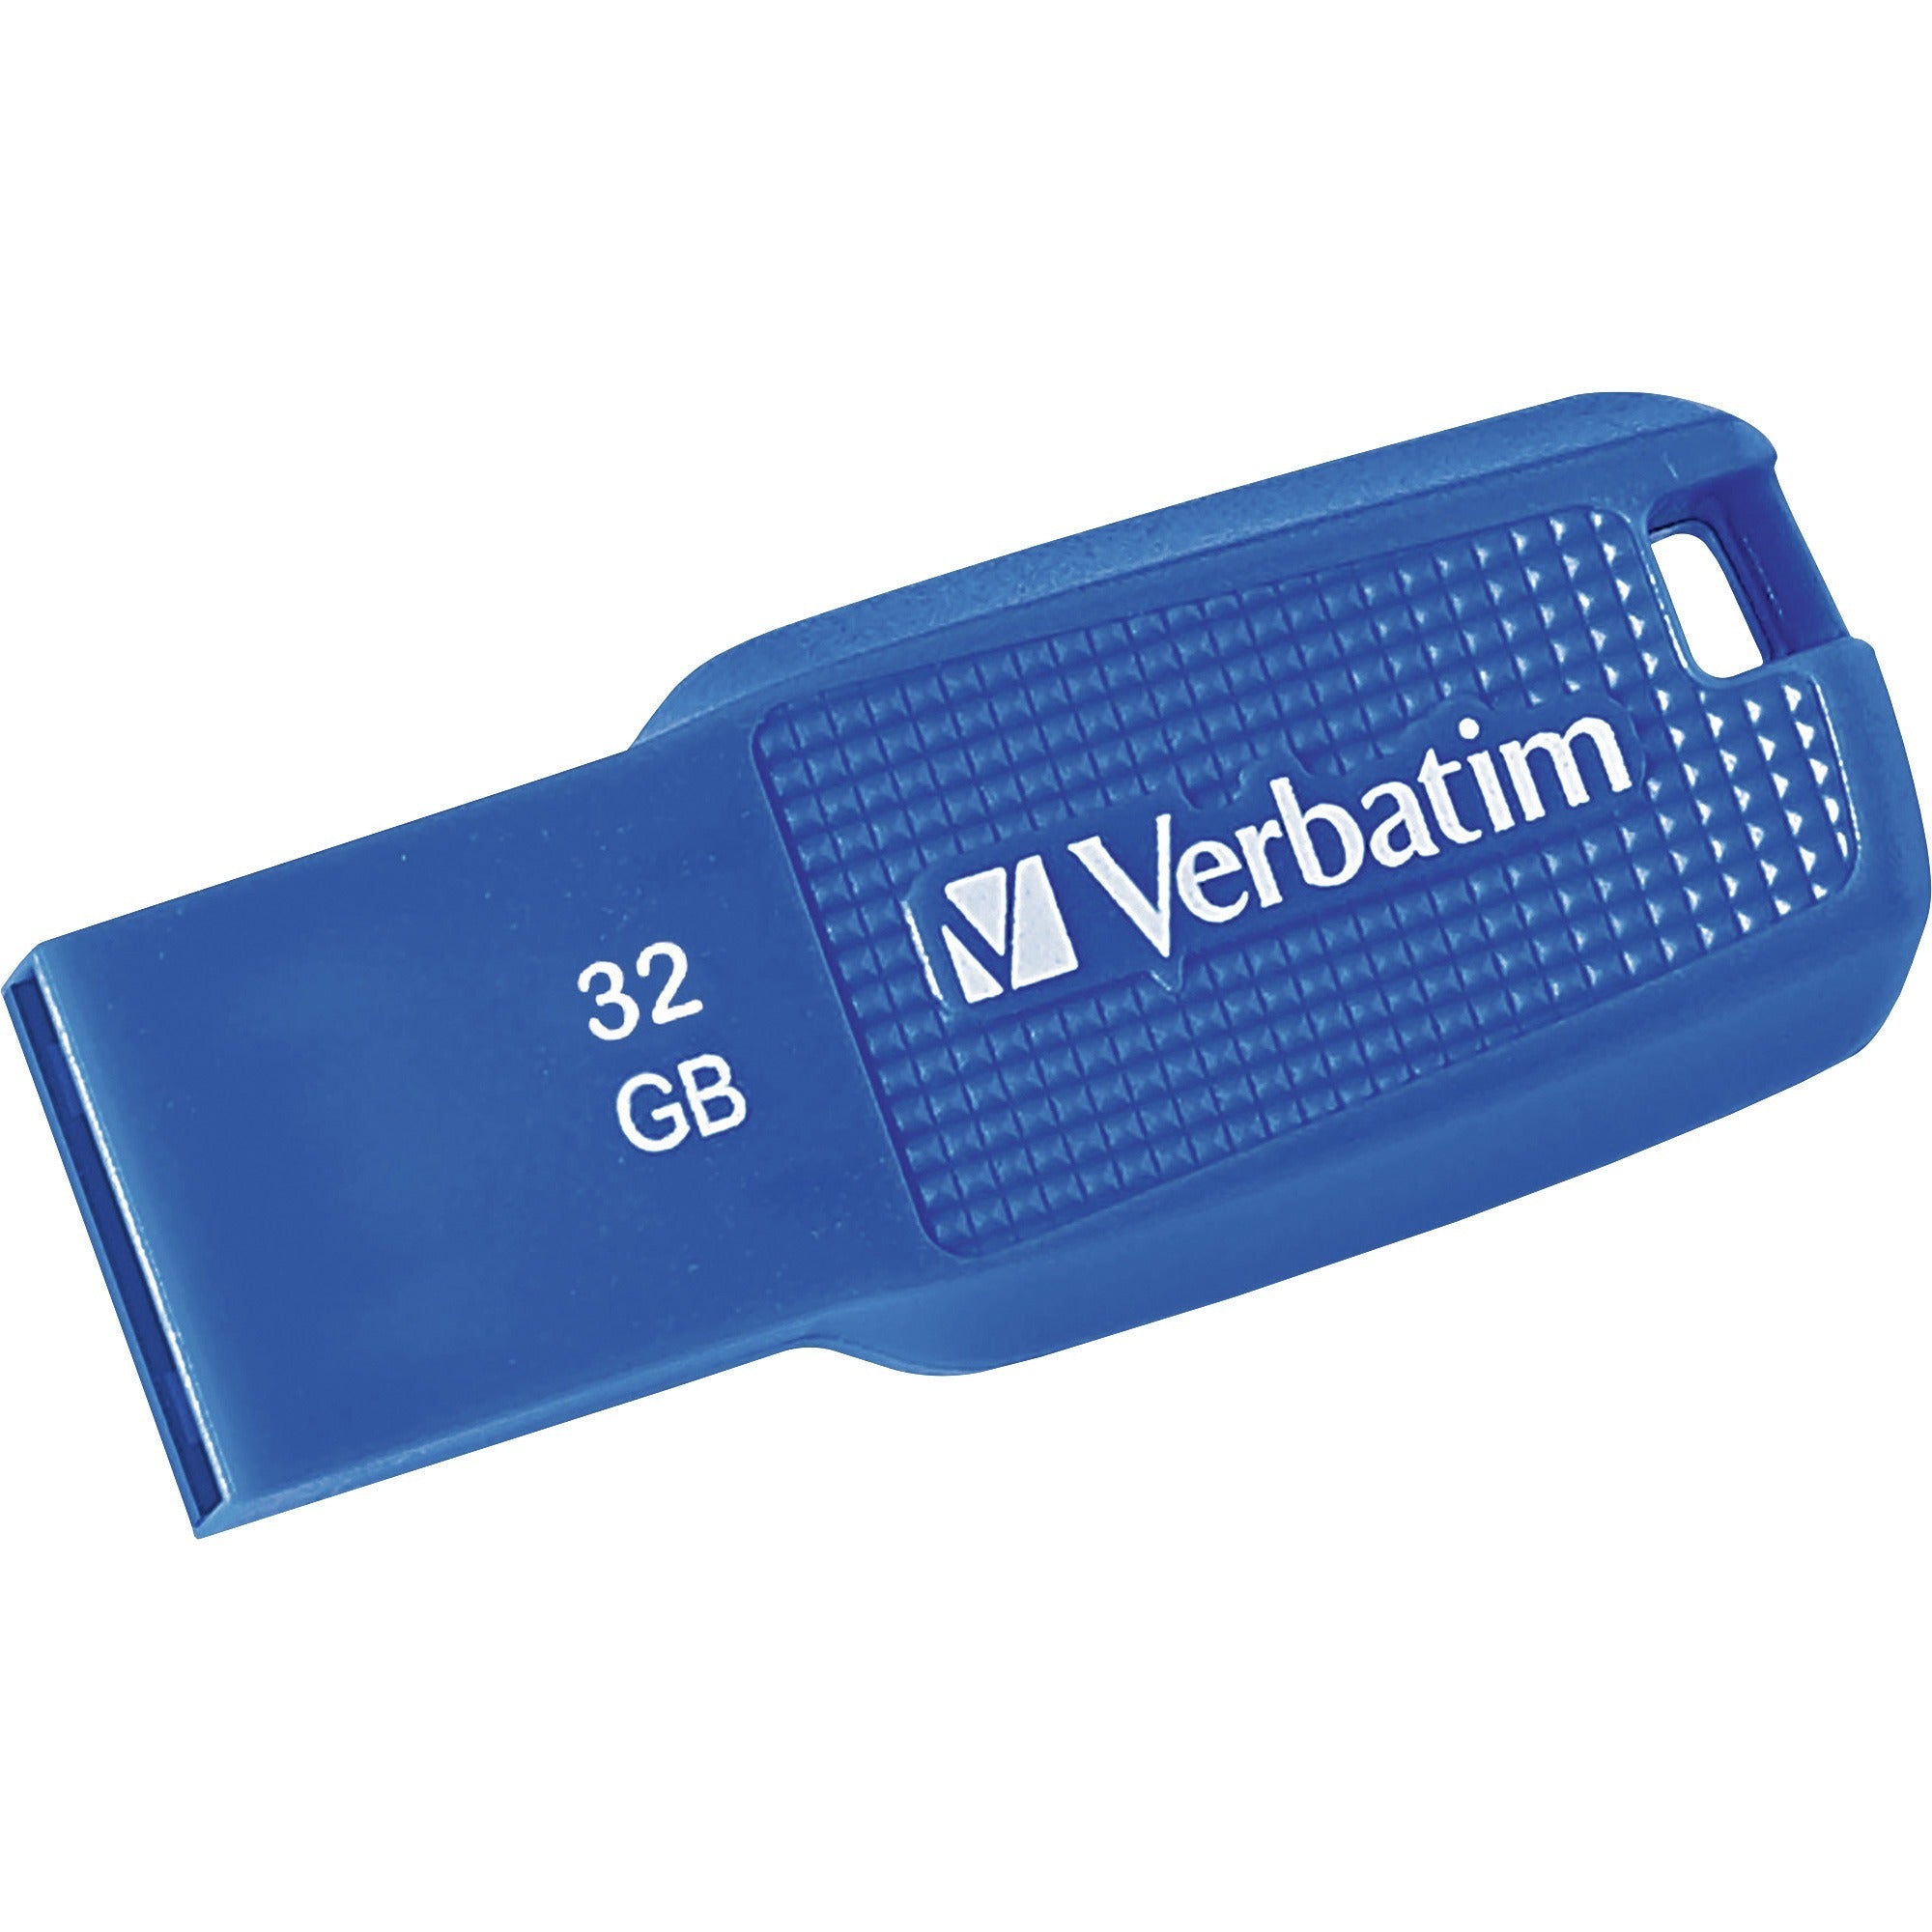 verbatim-32gb-ergo-usb-30-flash-drive-blue-the-verbatim-ergo-usb-drive-features-an-ergonomic-design-for-in-hand-comfort-and-cob-design-for-enhanced-reliability_ver70878 - 1